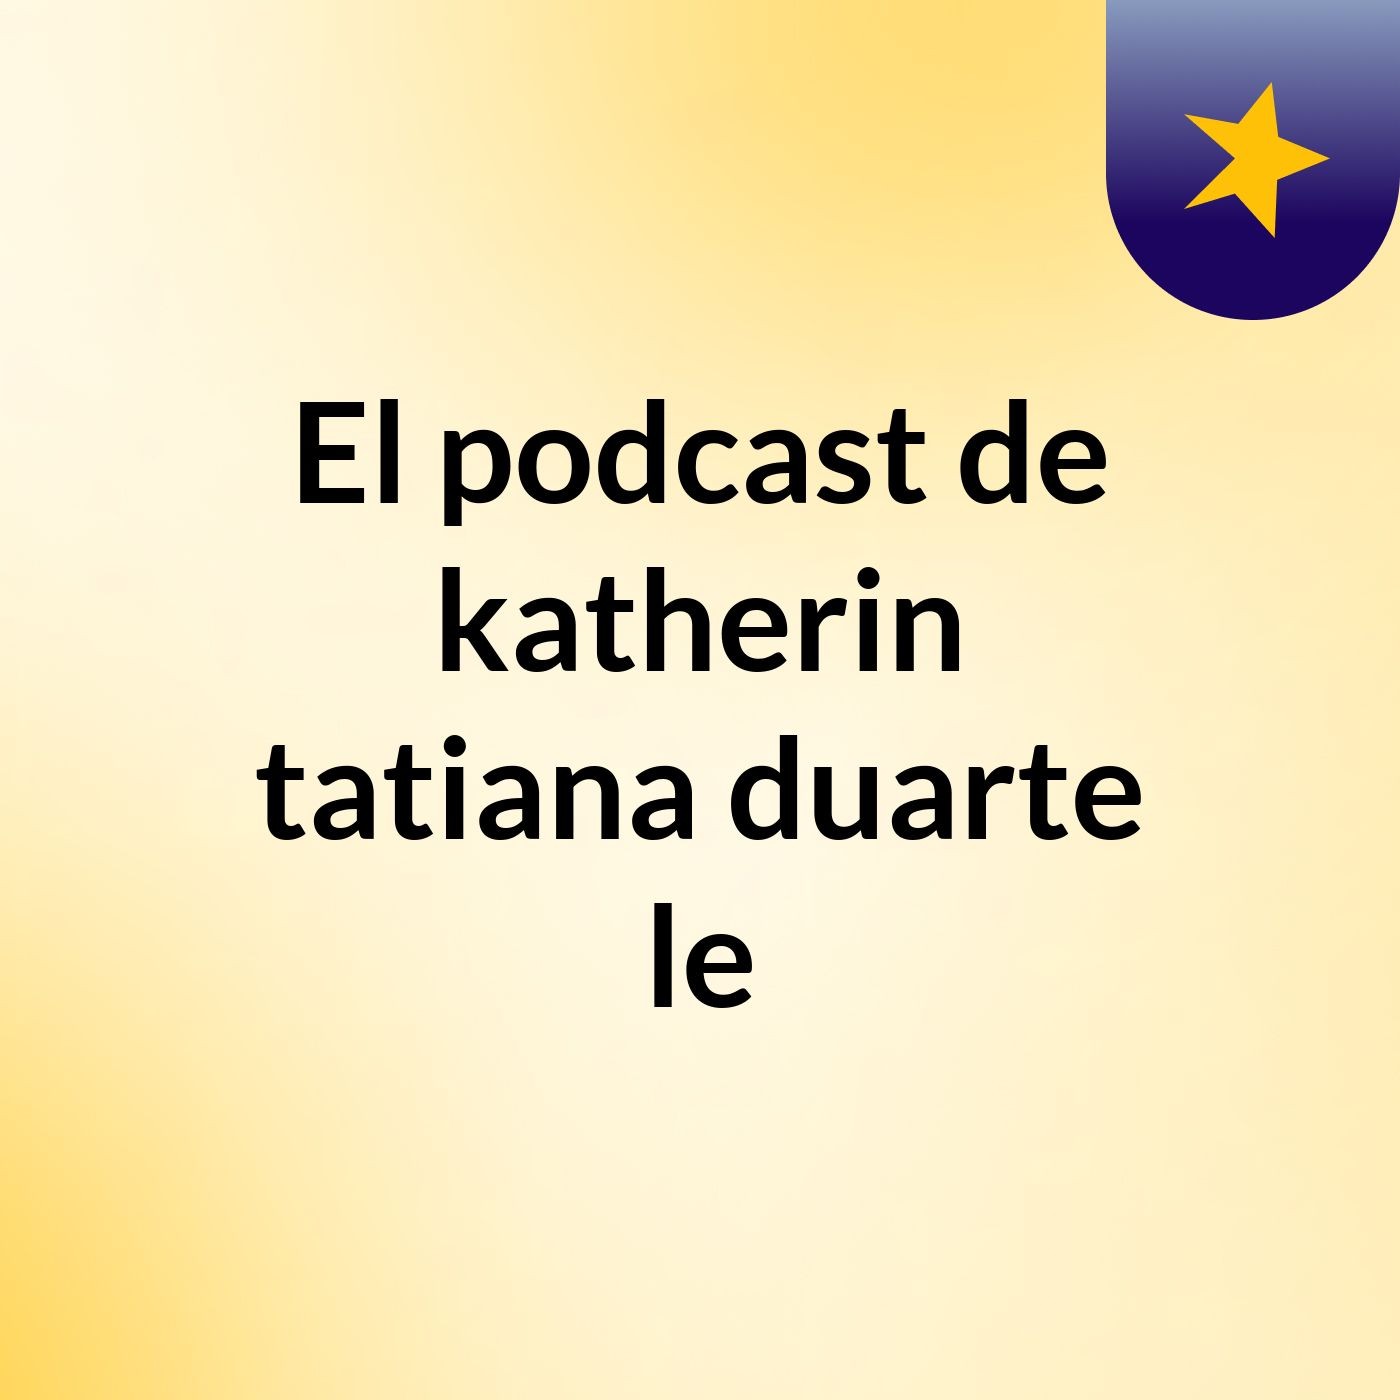 El podcast de katherin tatiana duarte le